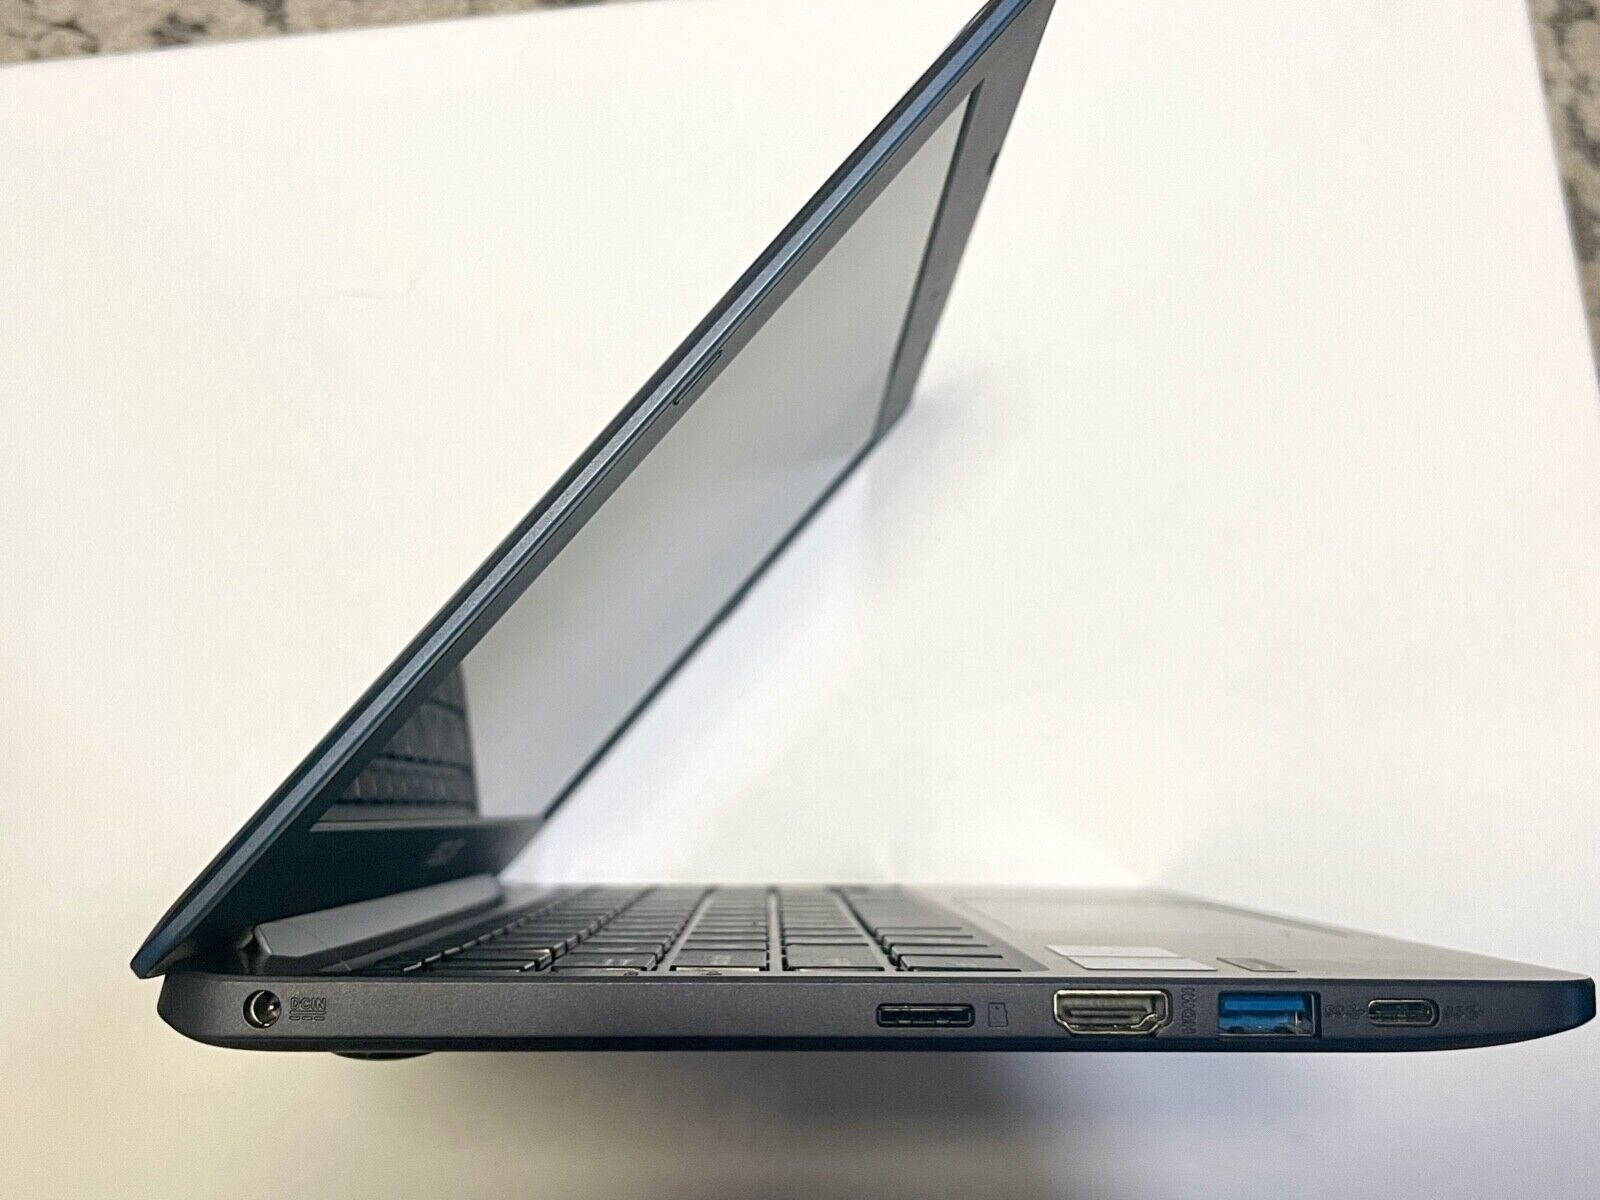 ASUS E203N 11.6 inch Laptop - Blue